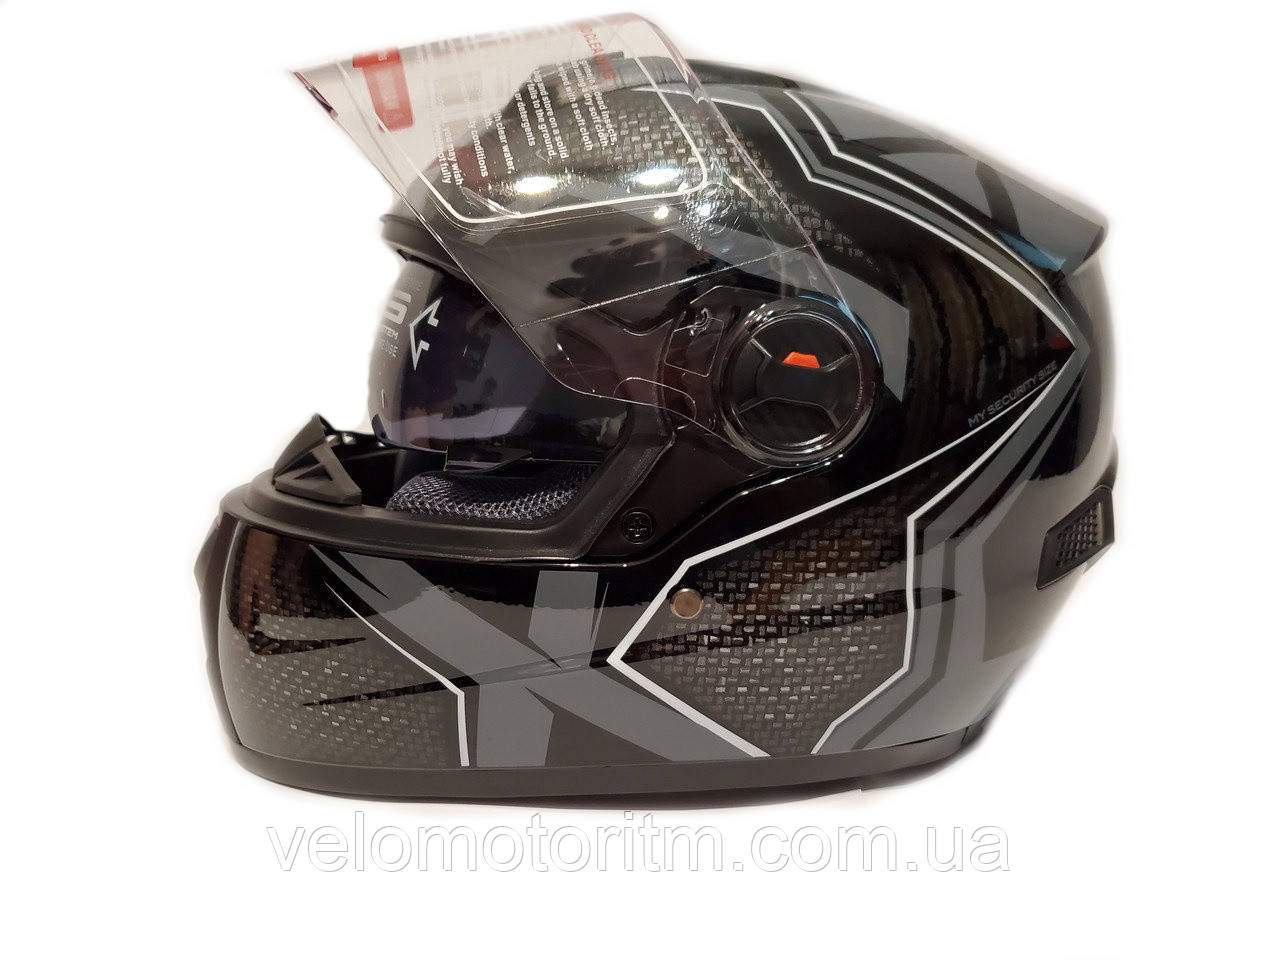 

Мото шлем черно серый с очками Vland Размер М(57-58)